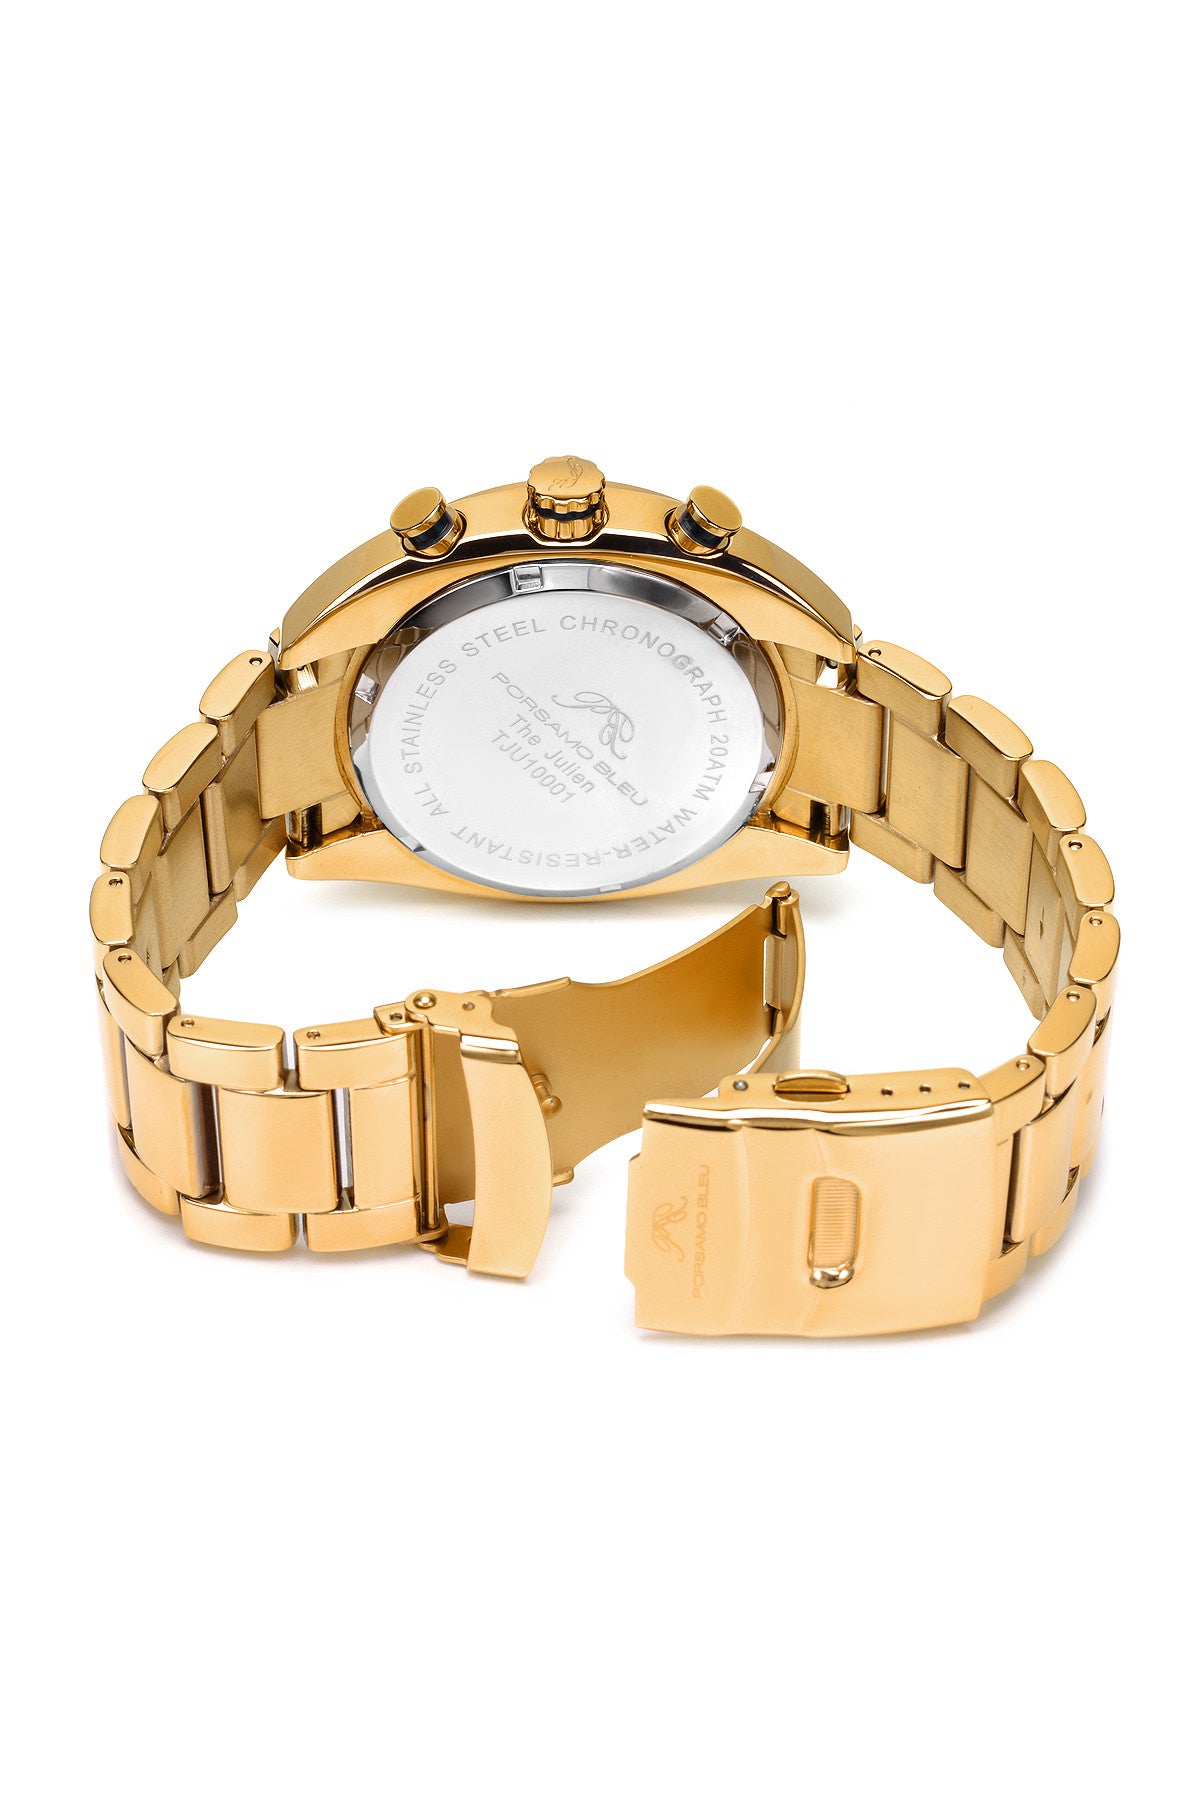 Porsamo Bleu Julien luxury  chronograph men's stainless steel watch, gold, white, black 274AJUS